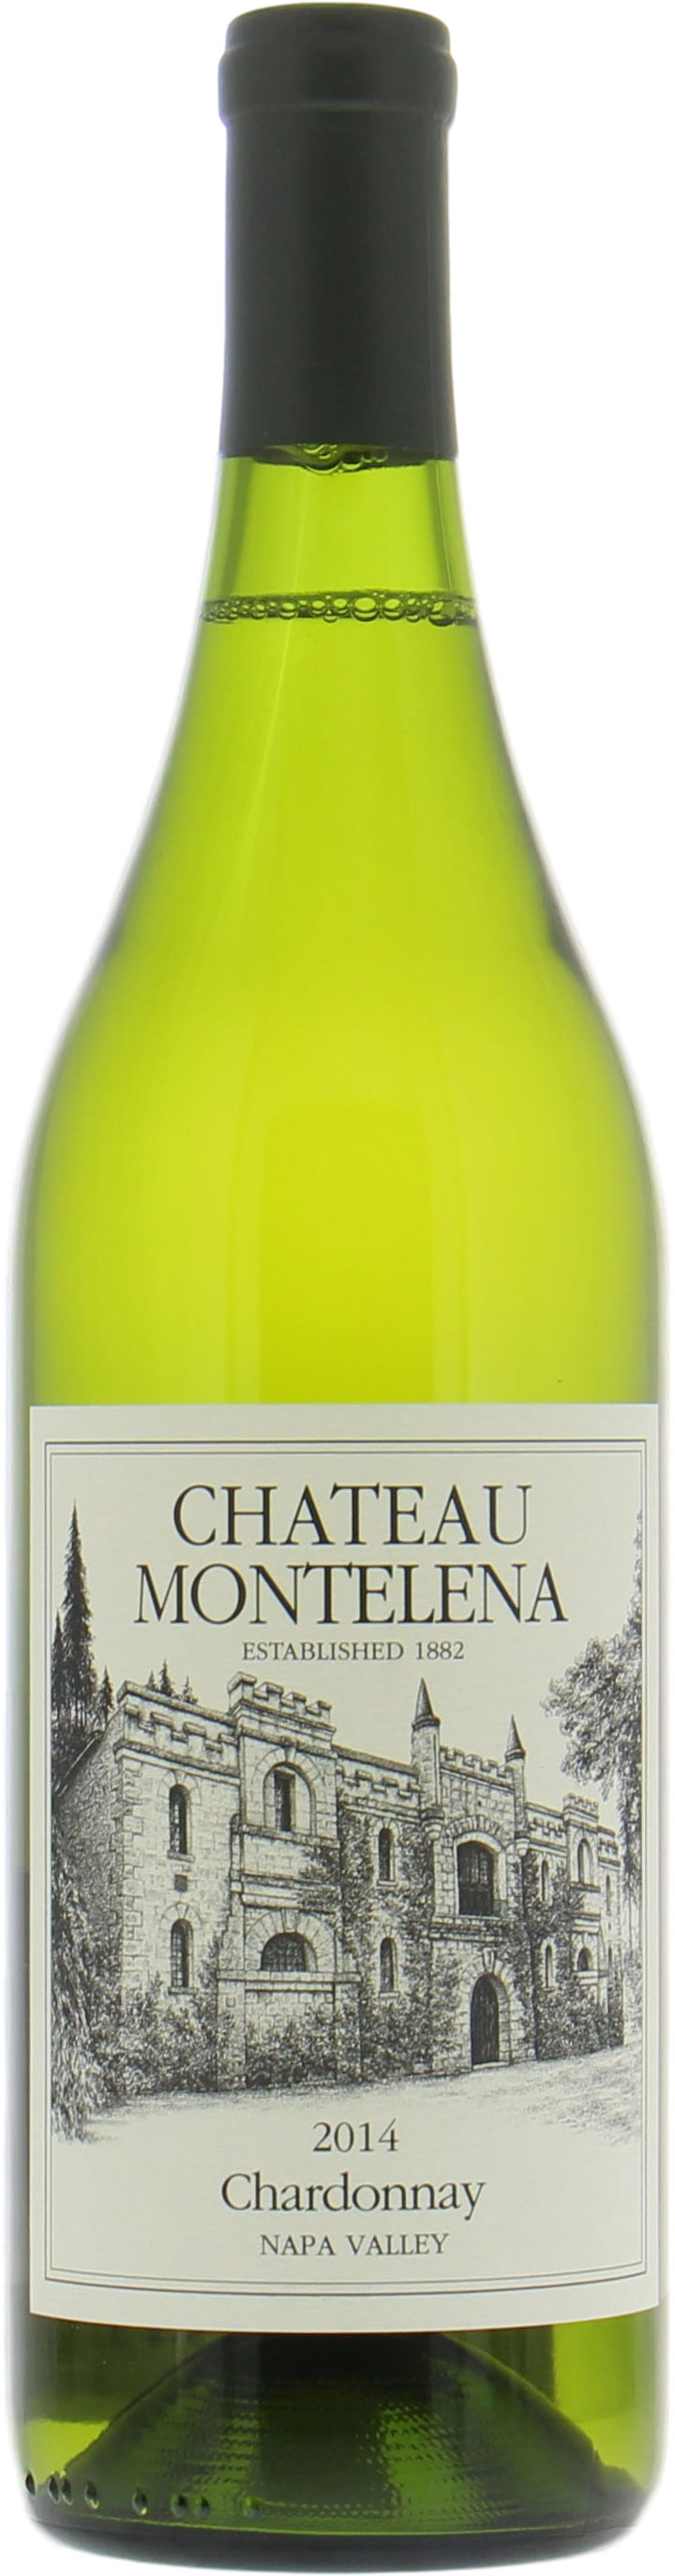 Chateau Montelena - The Chardonnay 2014 Perfect